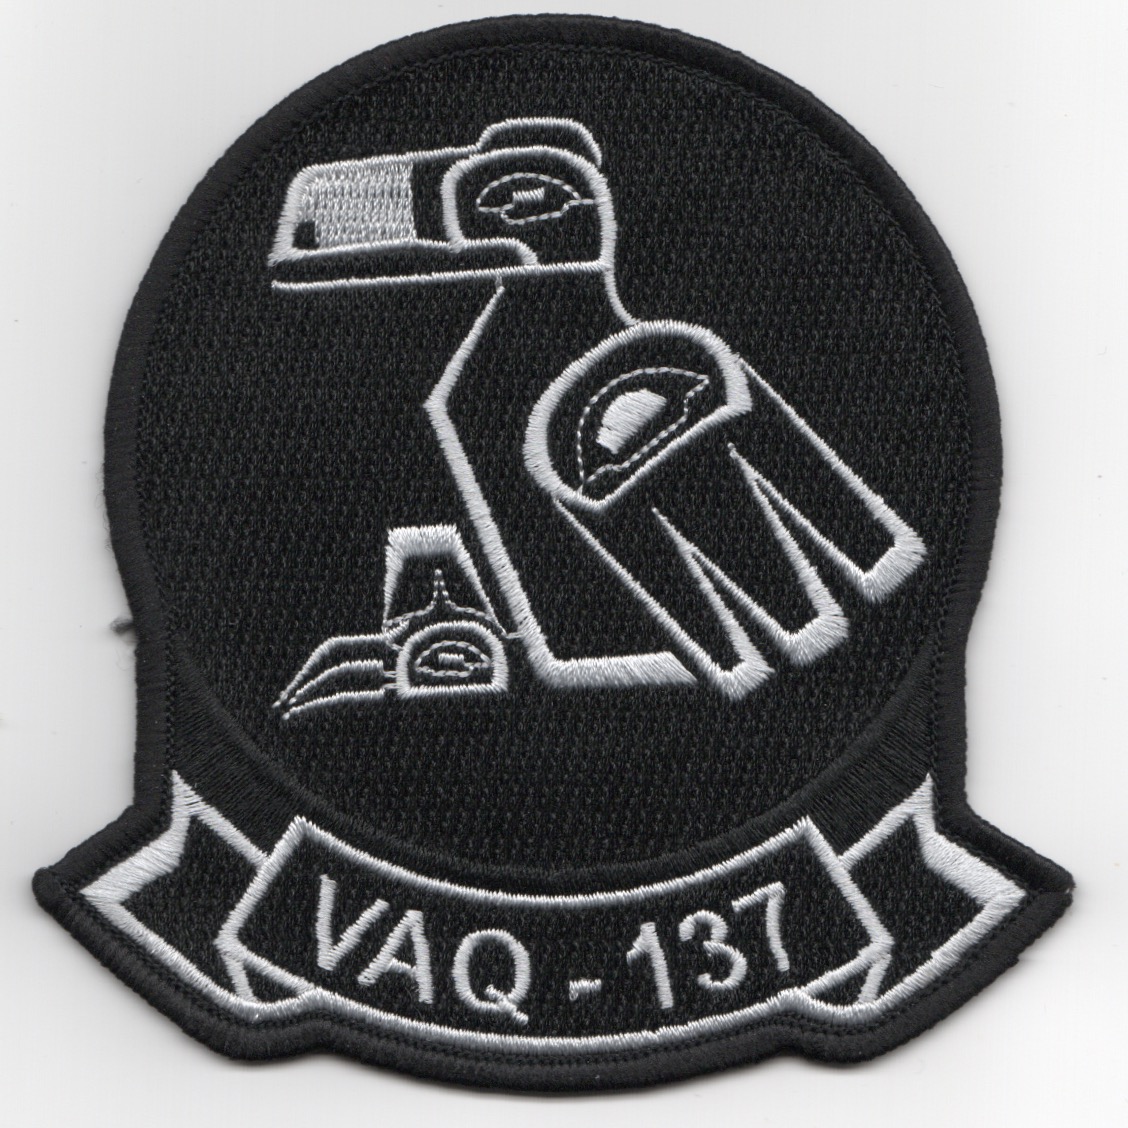 VAQ-137 Squadron Patch (Black)